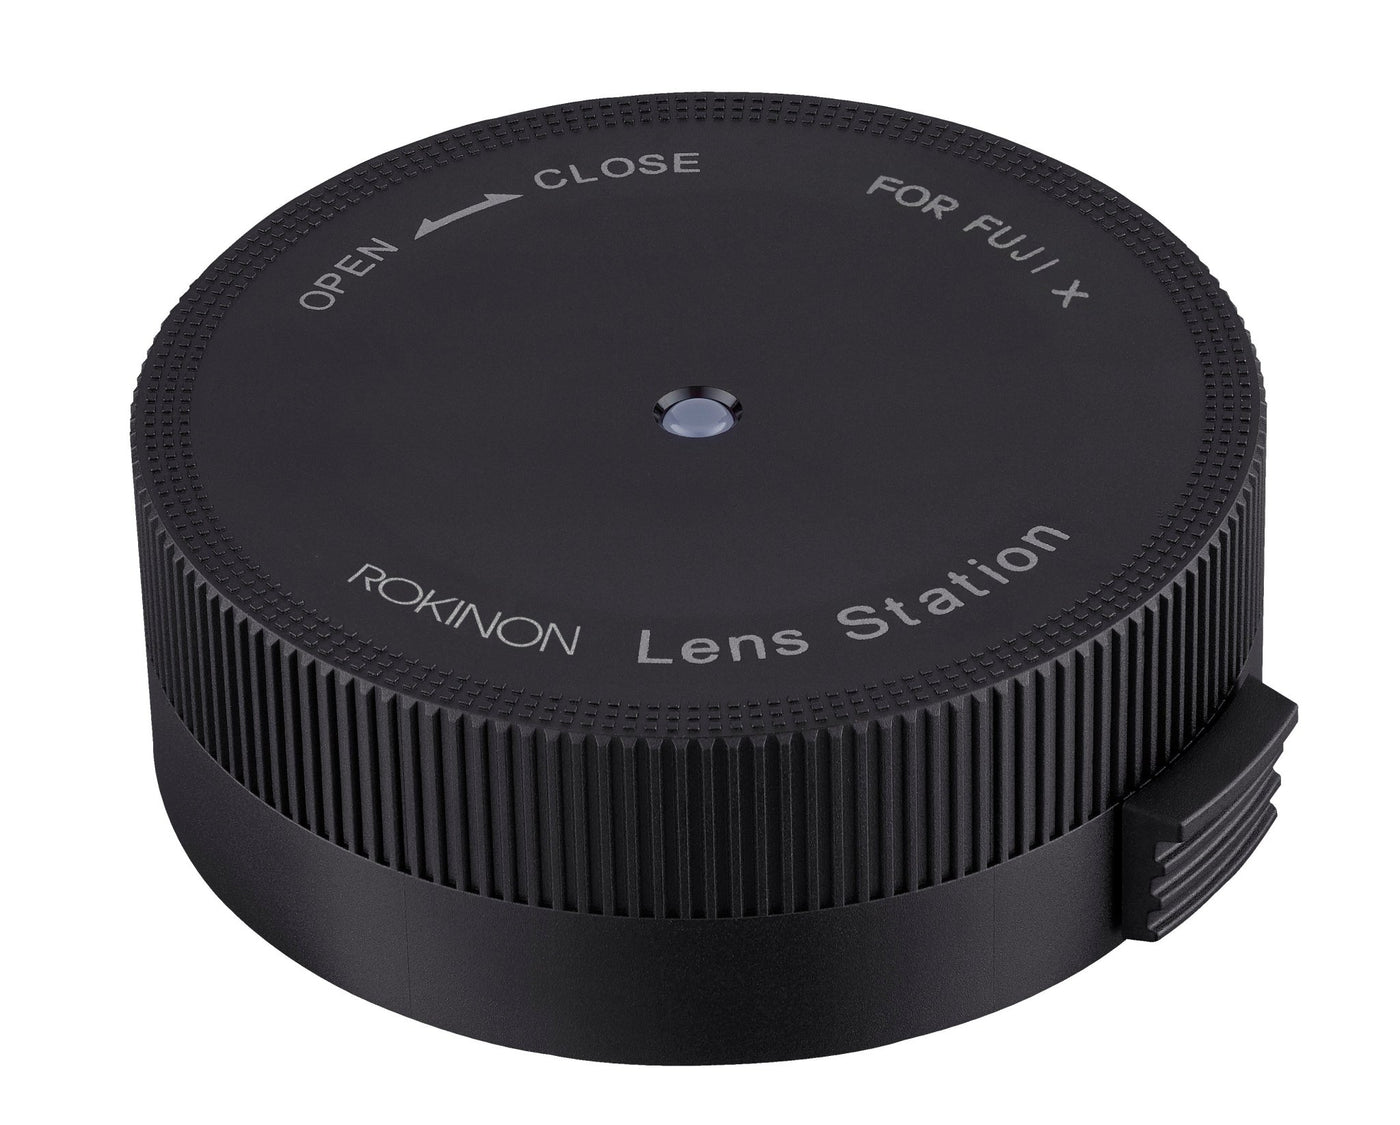 Lens Station for Rokinon Auto Focus Lenses (Fuji X) - Rokinon Lenses - IOLS-FX